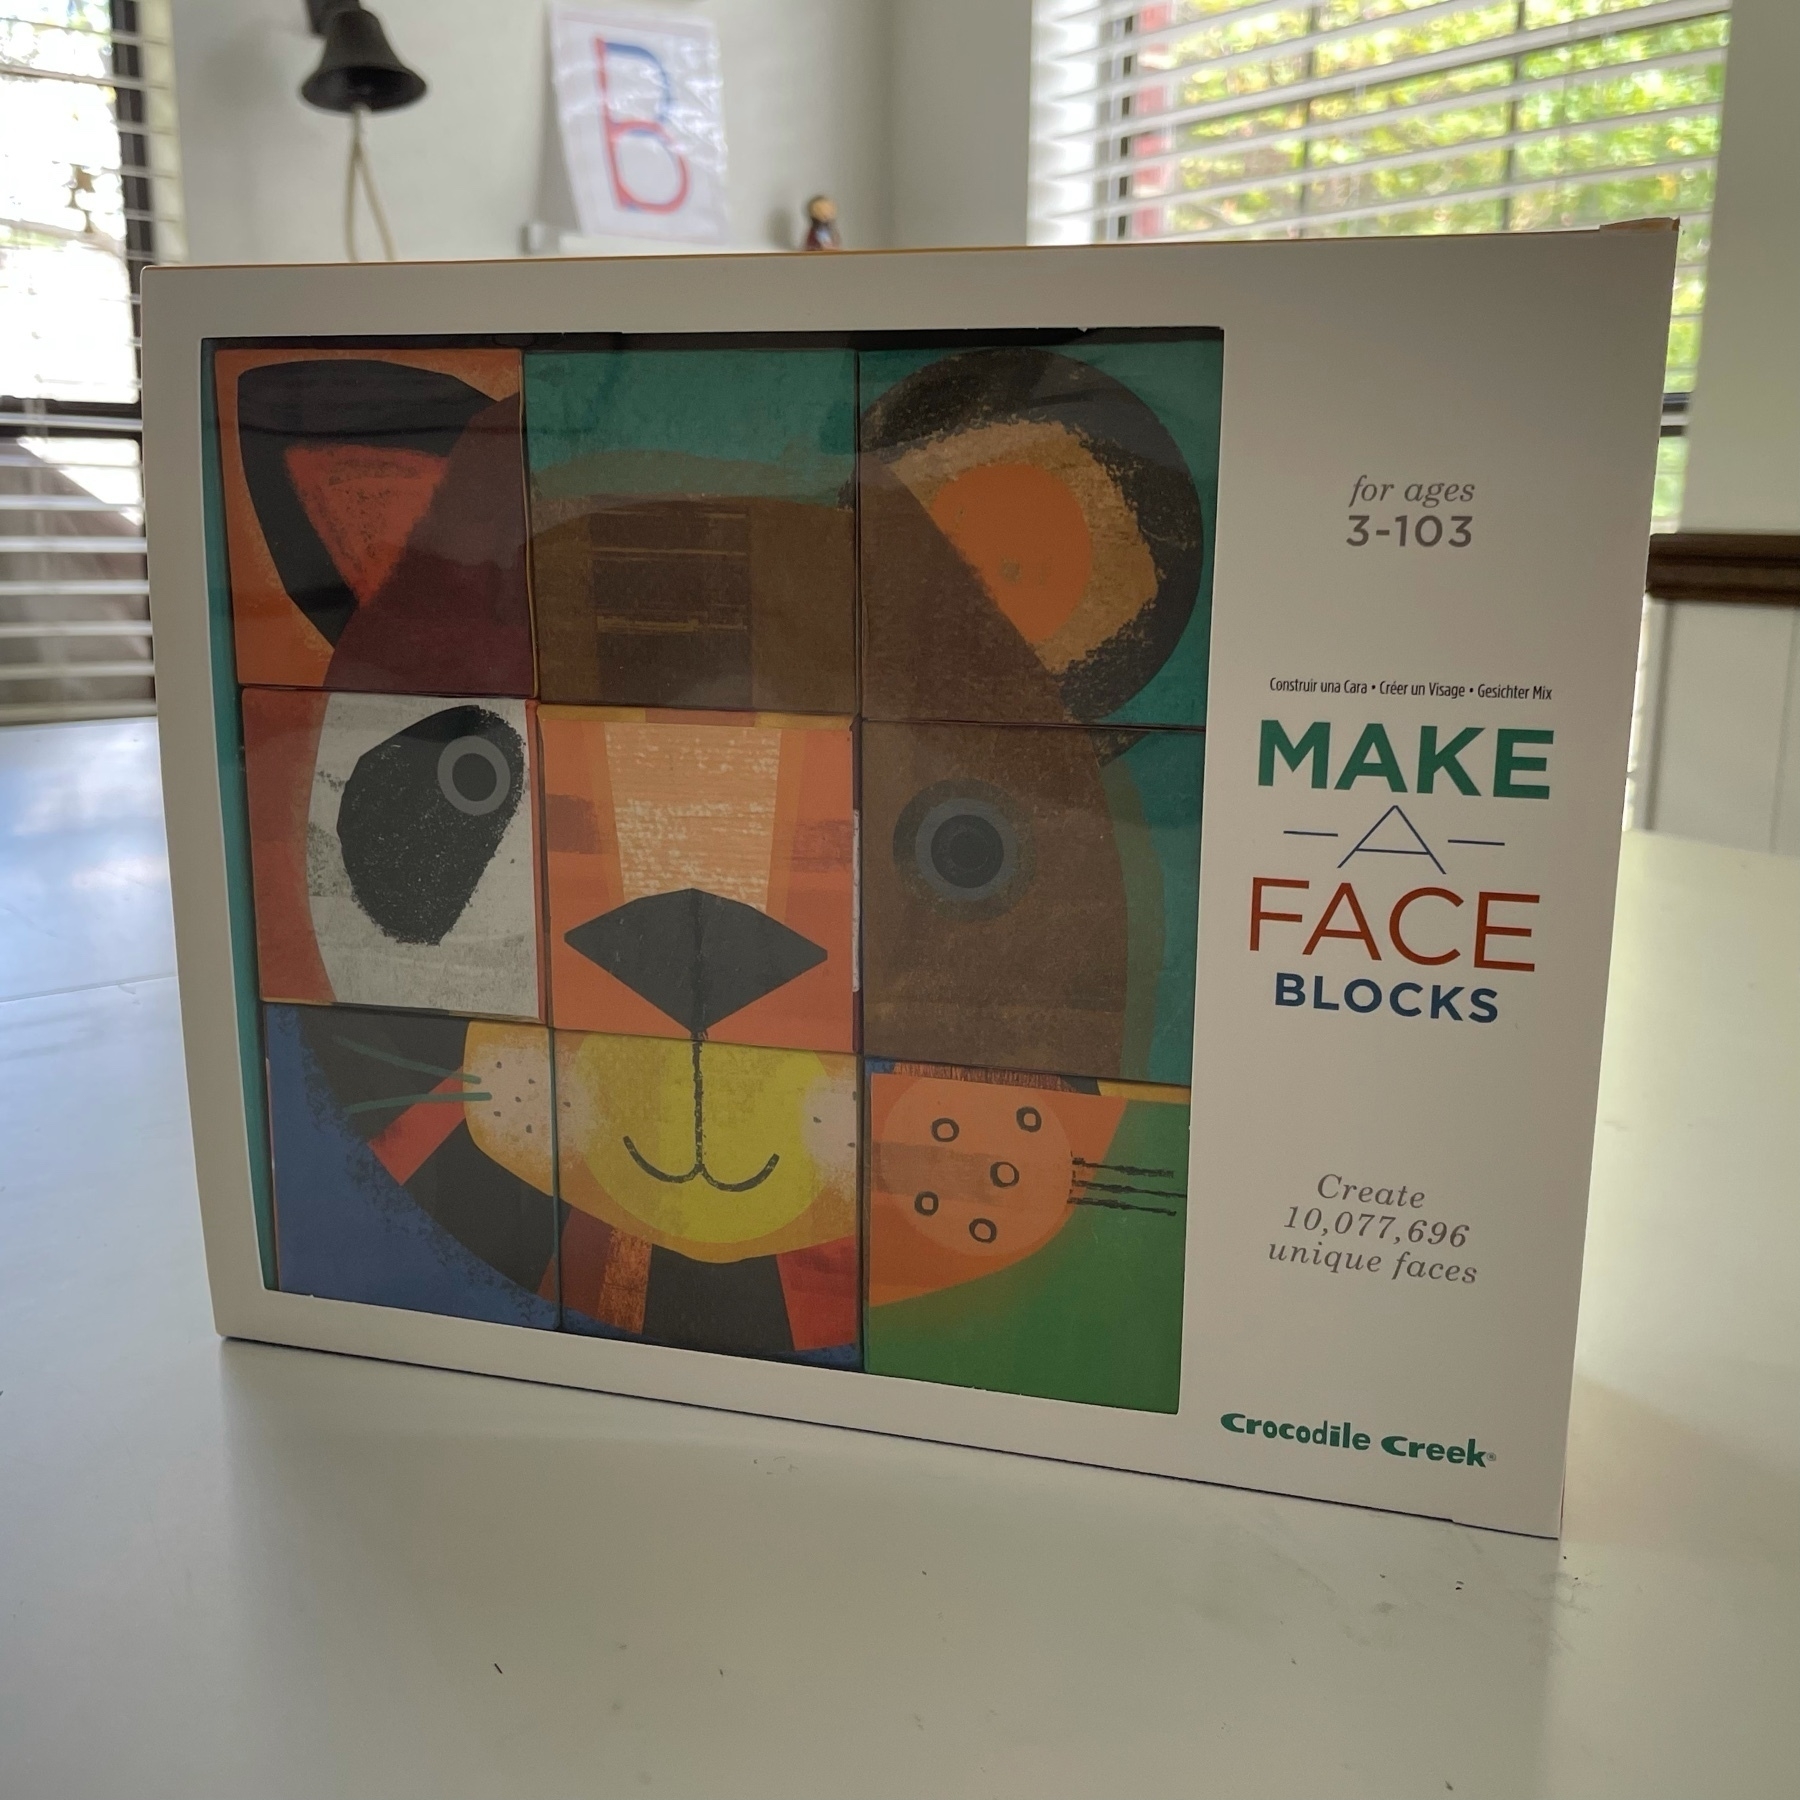 Make A Face blocks